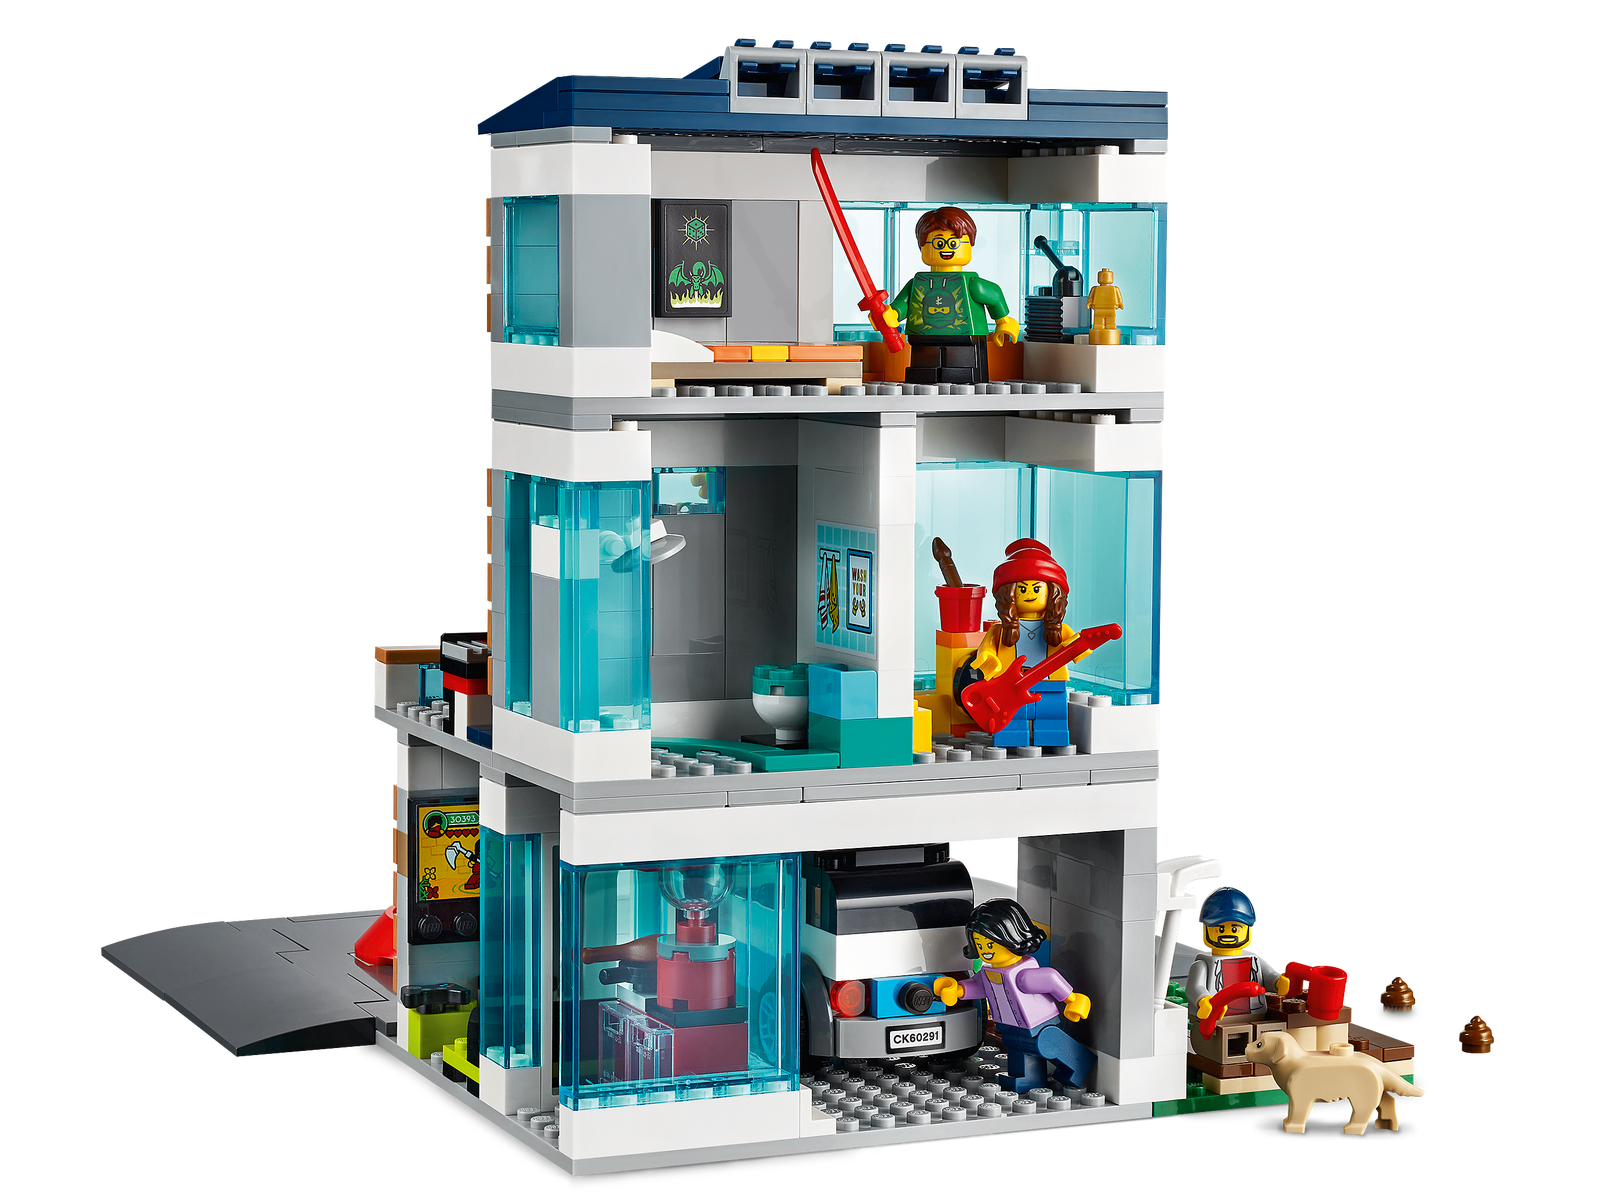 LEGO City Modern Family House 60291